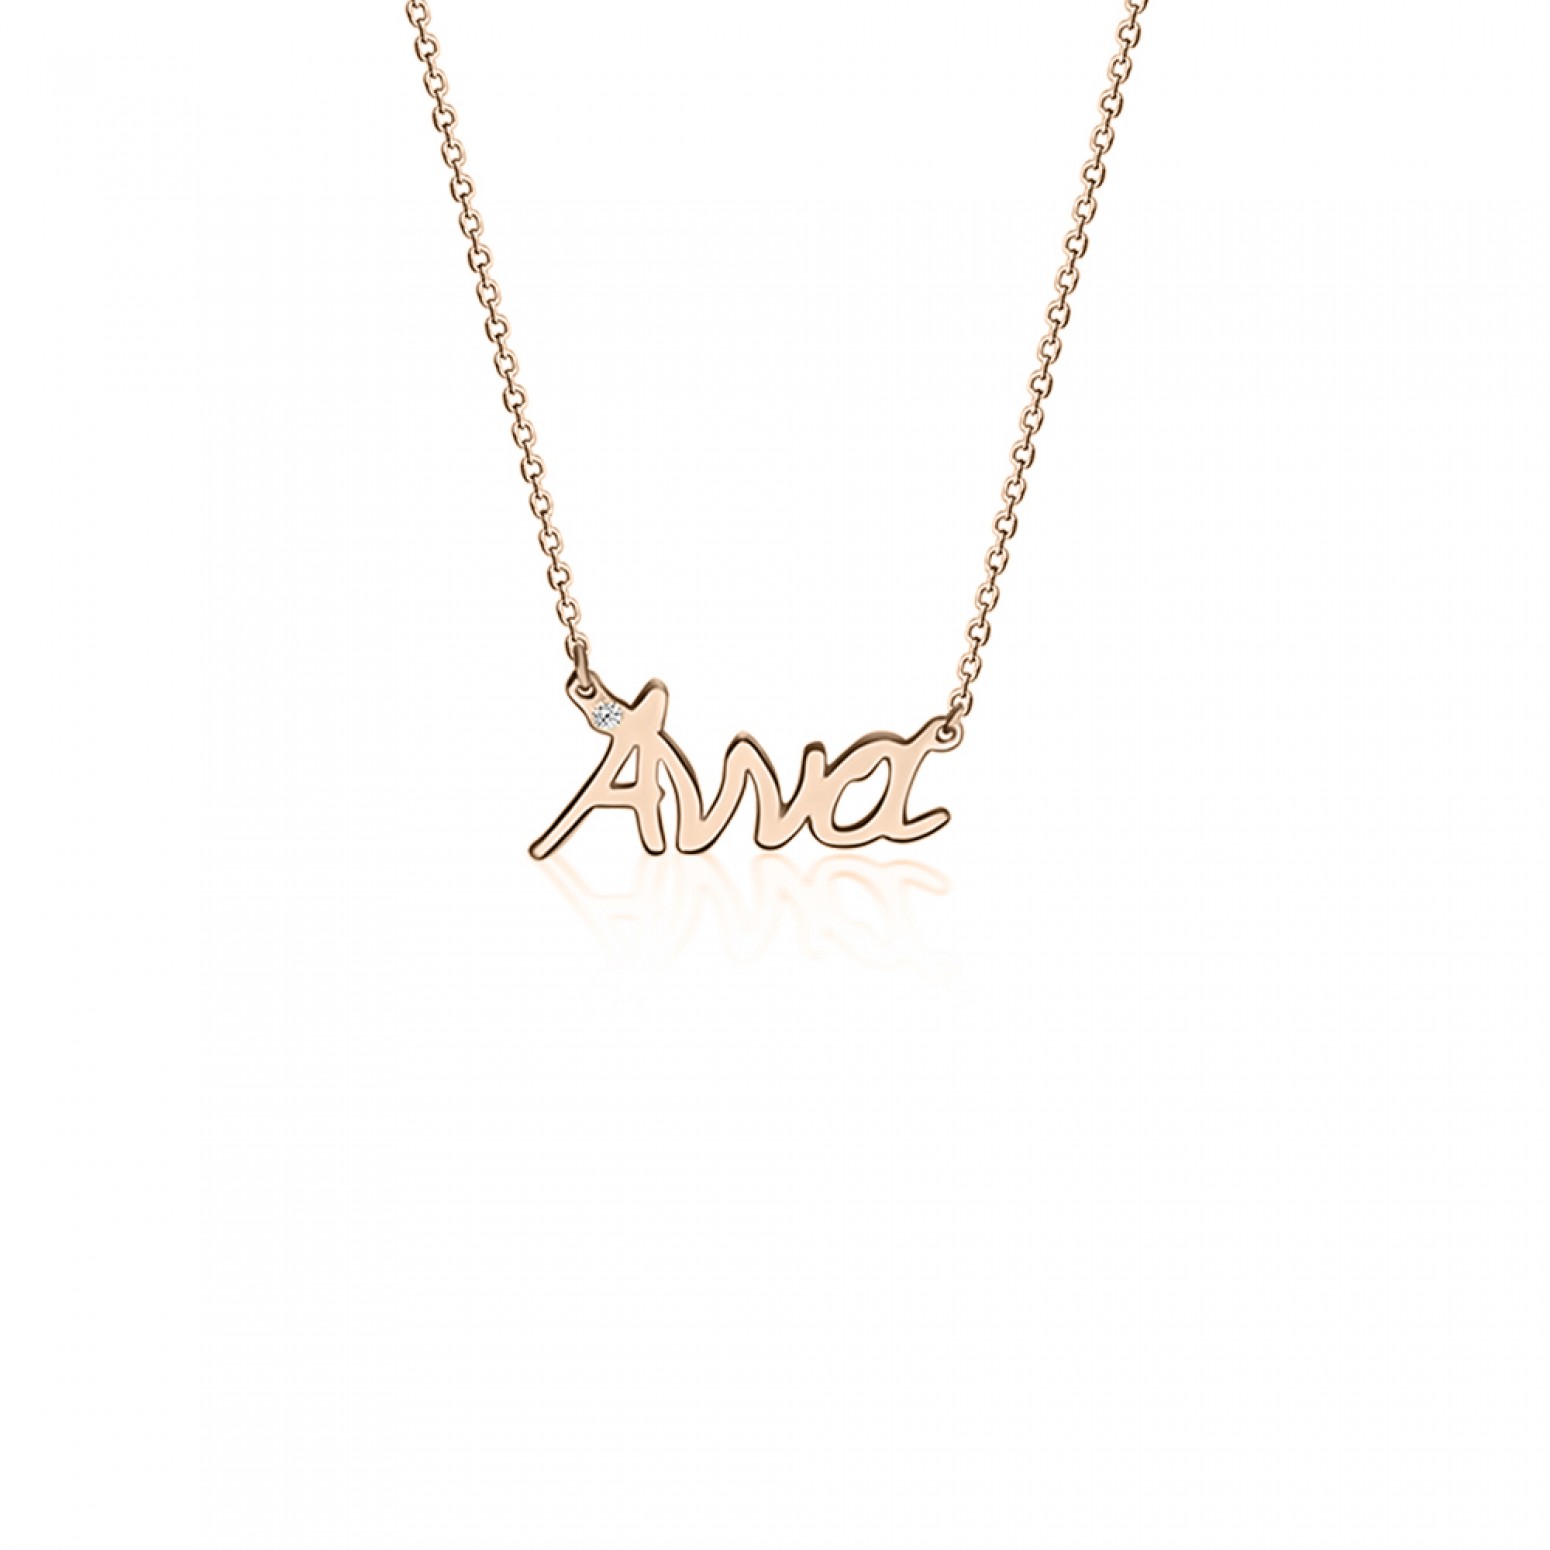 Name necklace Άννα, Κ14 pink gold with diamond 0.004ct, VS2, H ko5326 NECKLACES Κοσμηματα - chrilia.gr